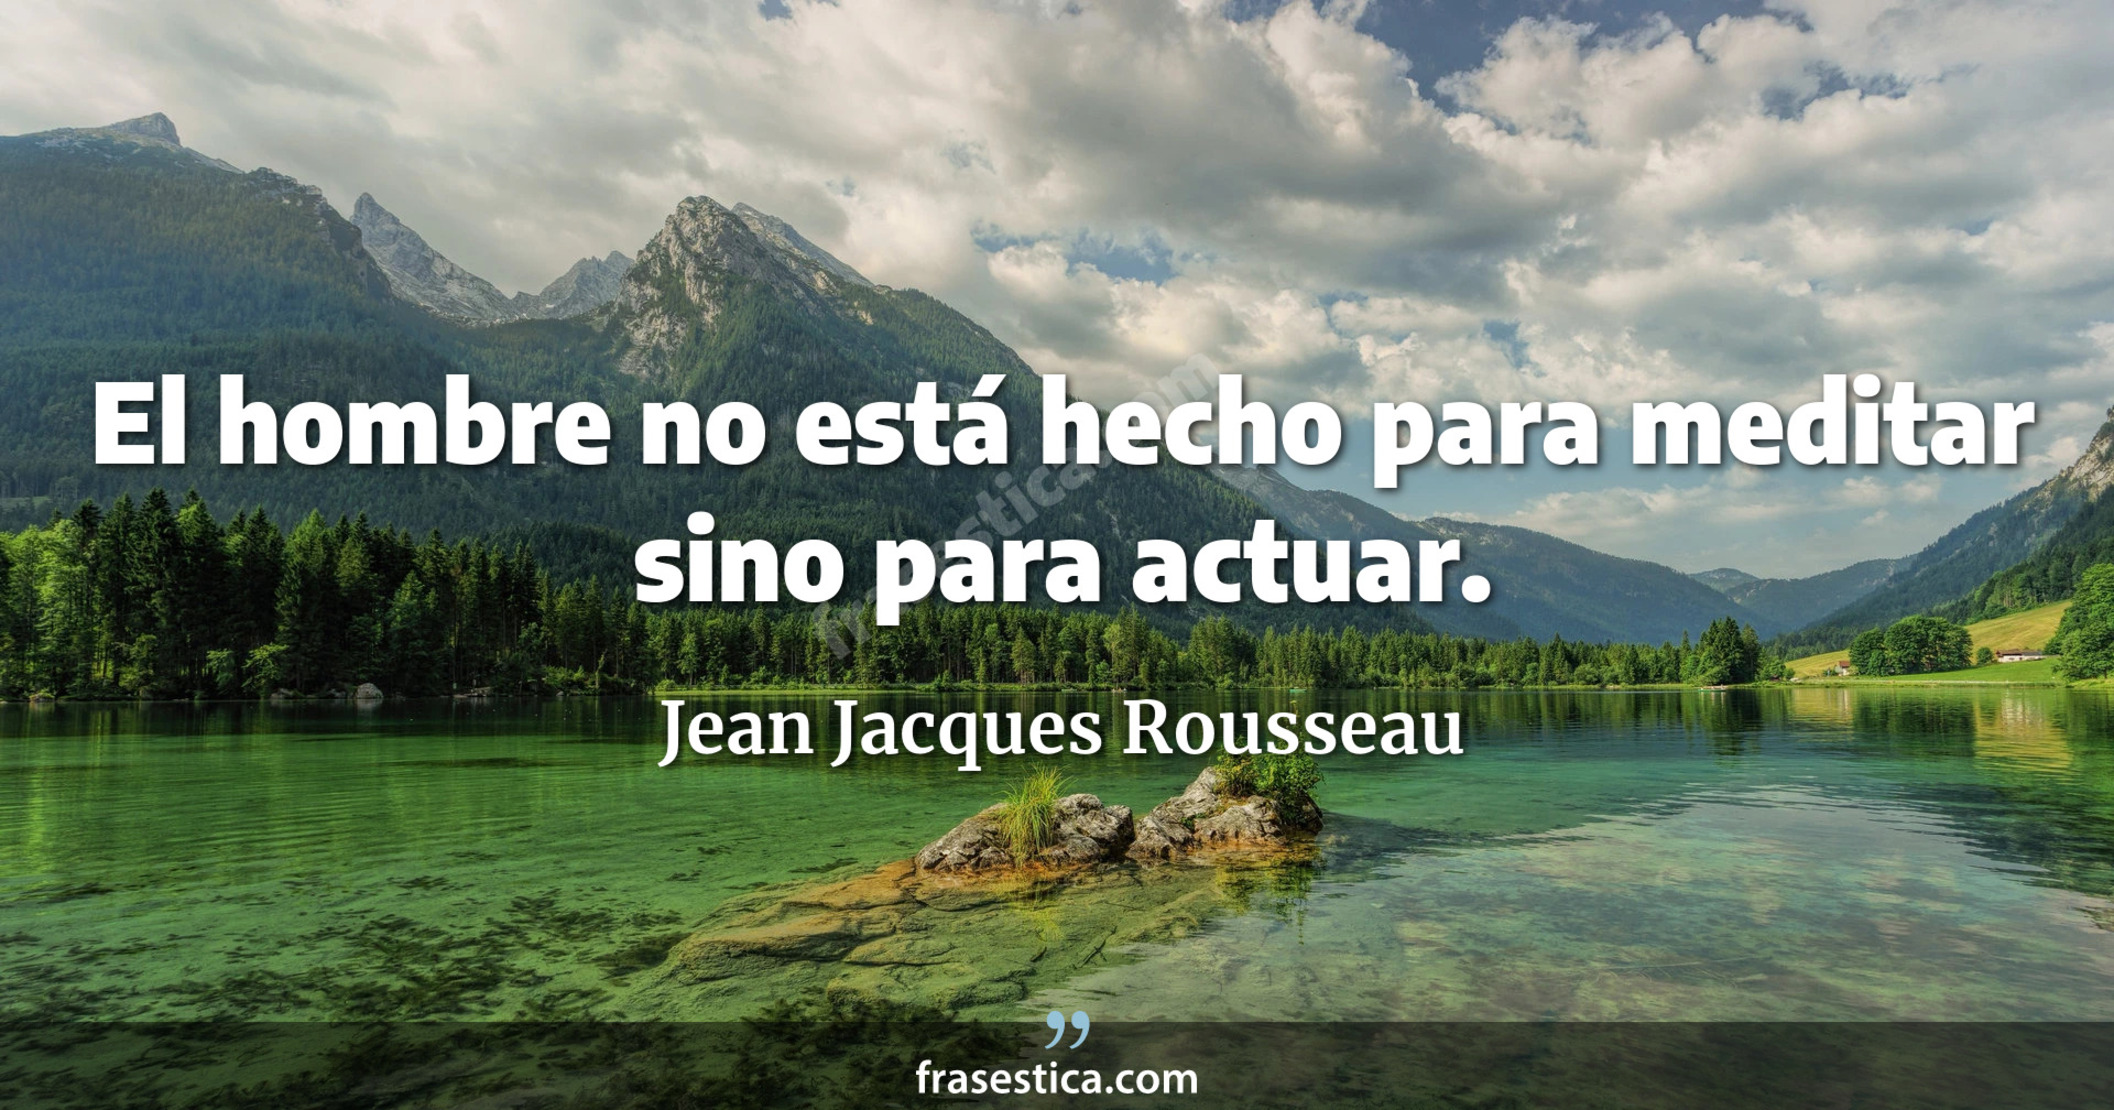 El hombre no está hecho para meditar sino para actuar. - Jean Jacques Rousseau